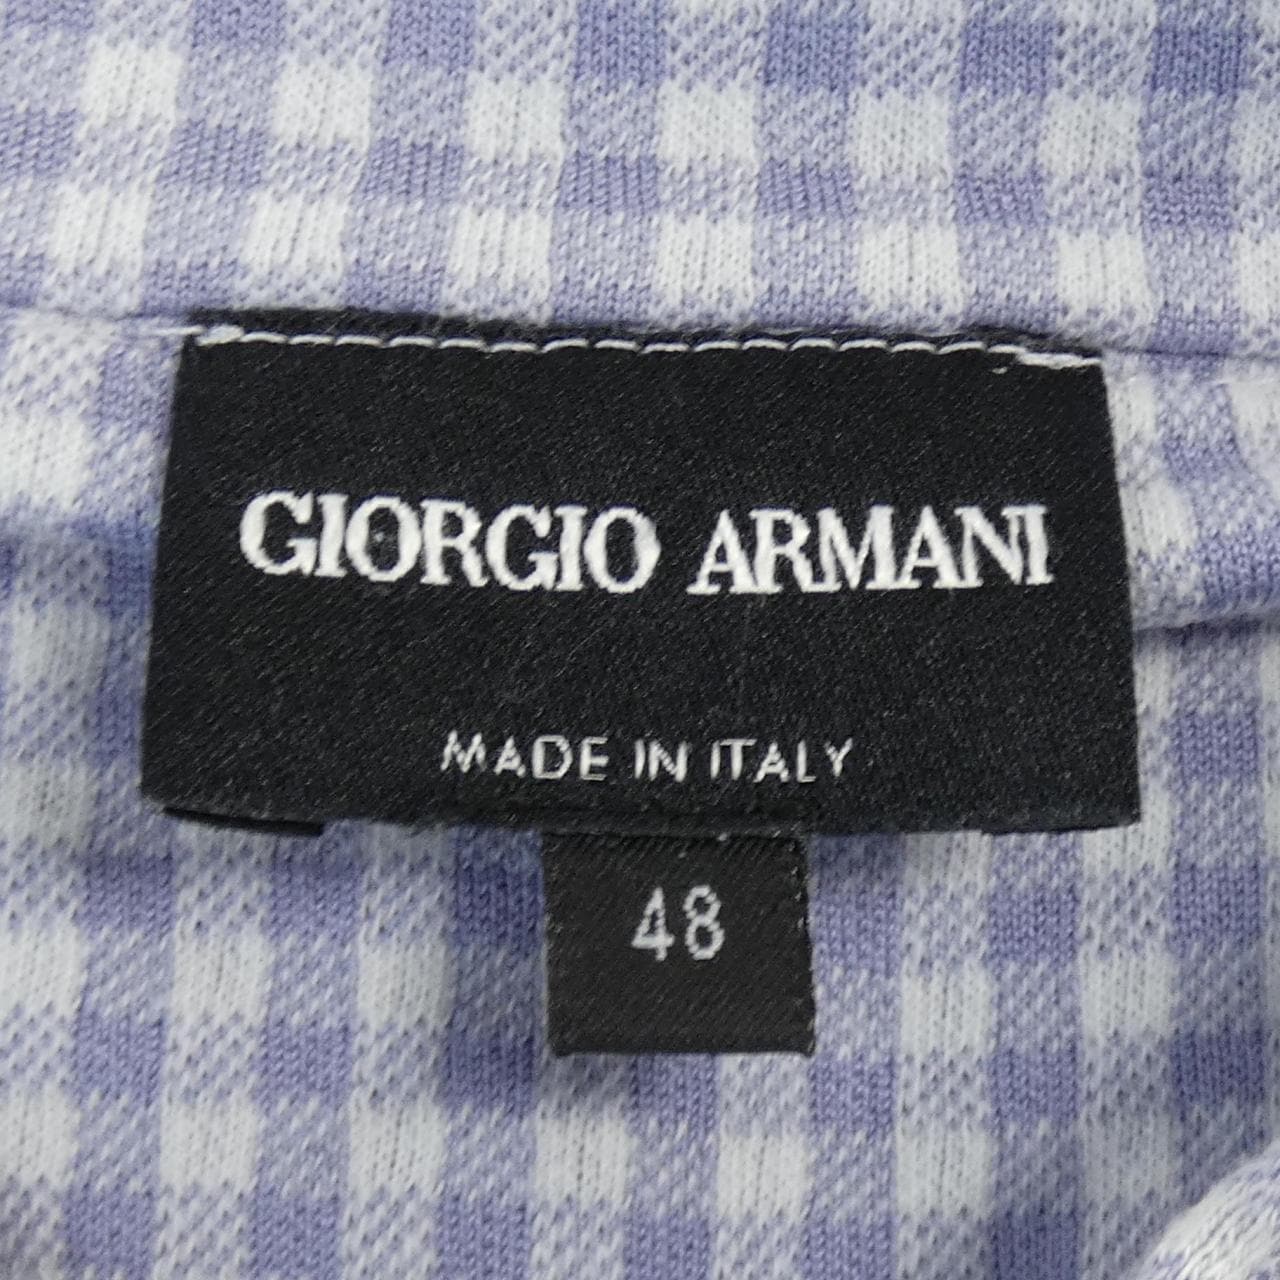 Giorgio Armani GIORGIO ARMANI Tops